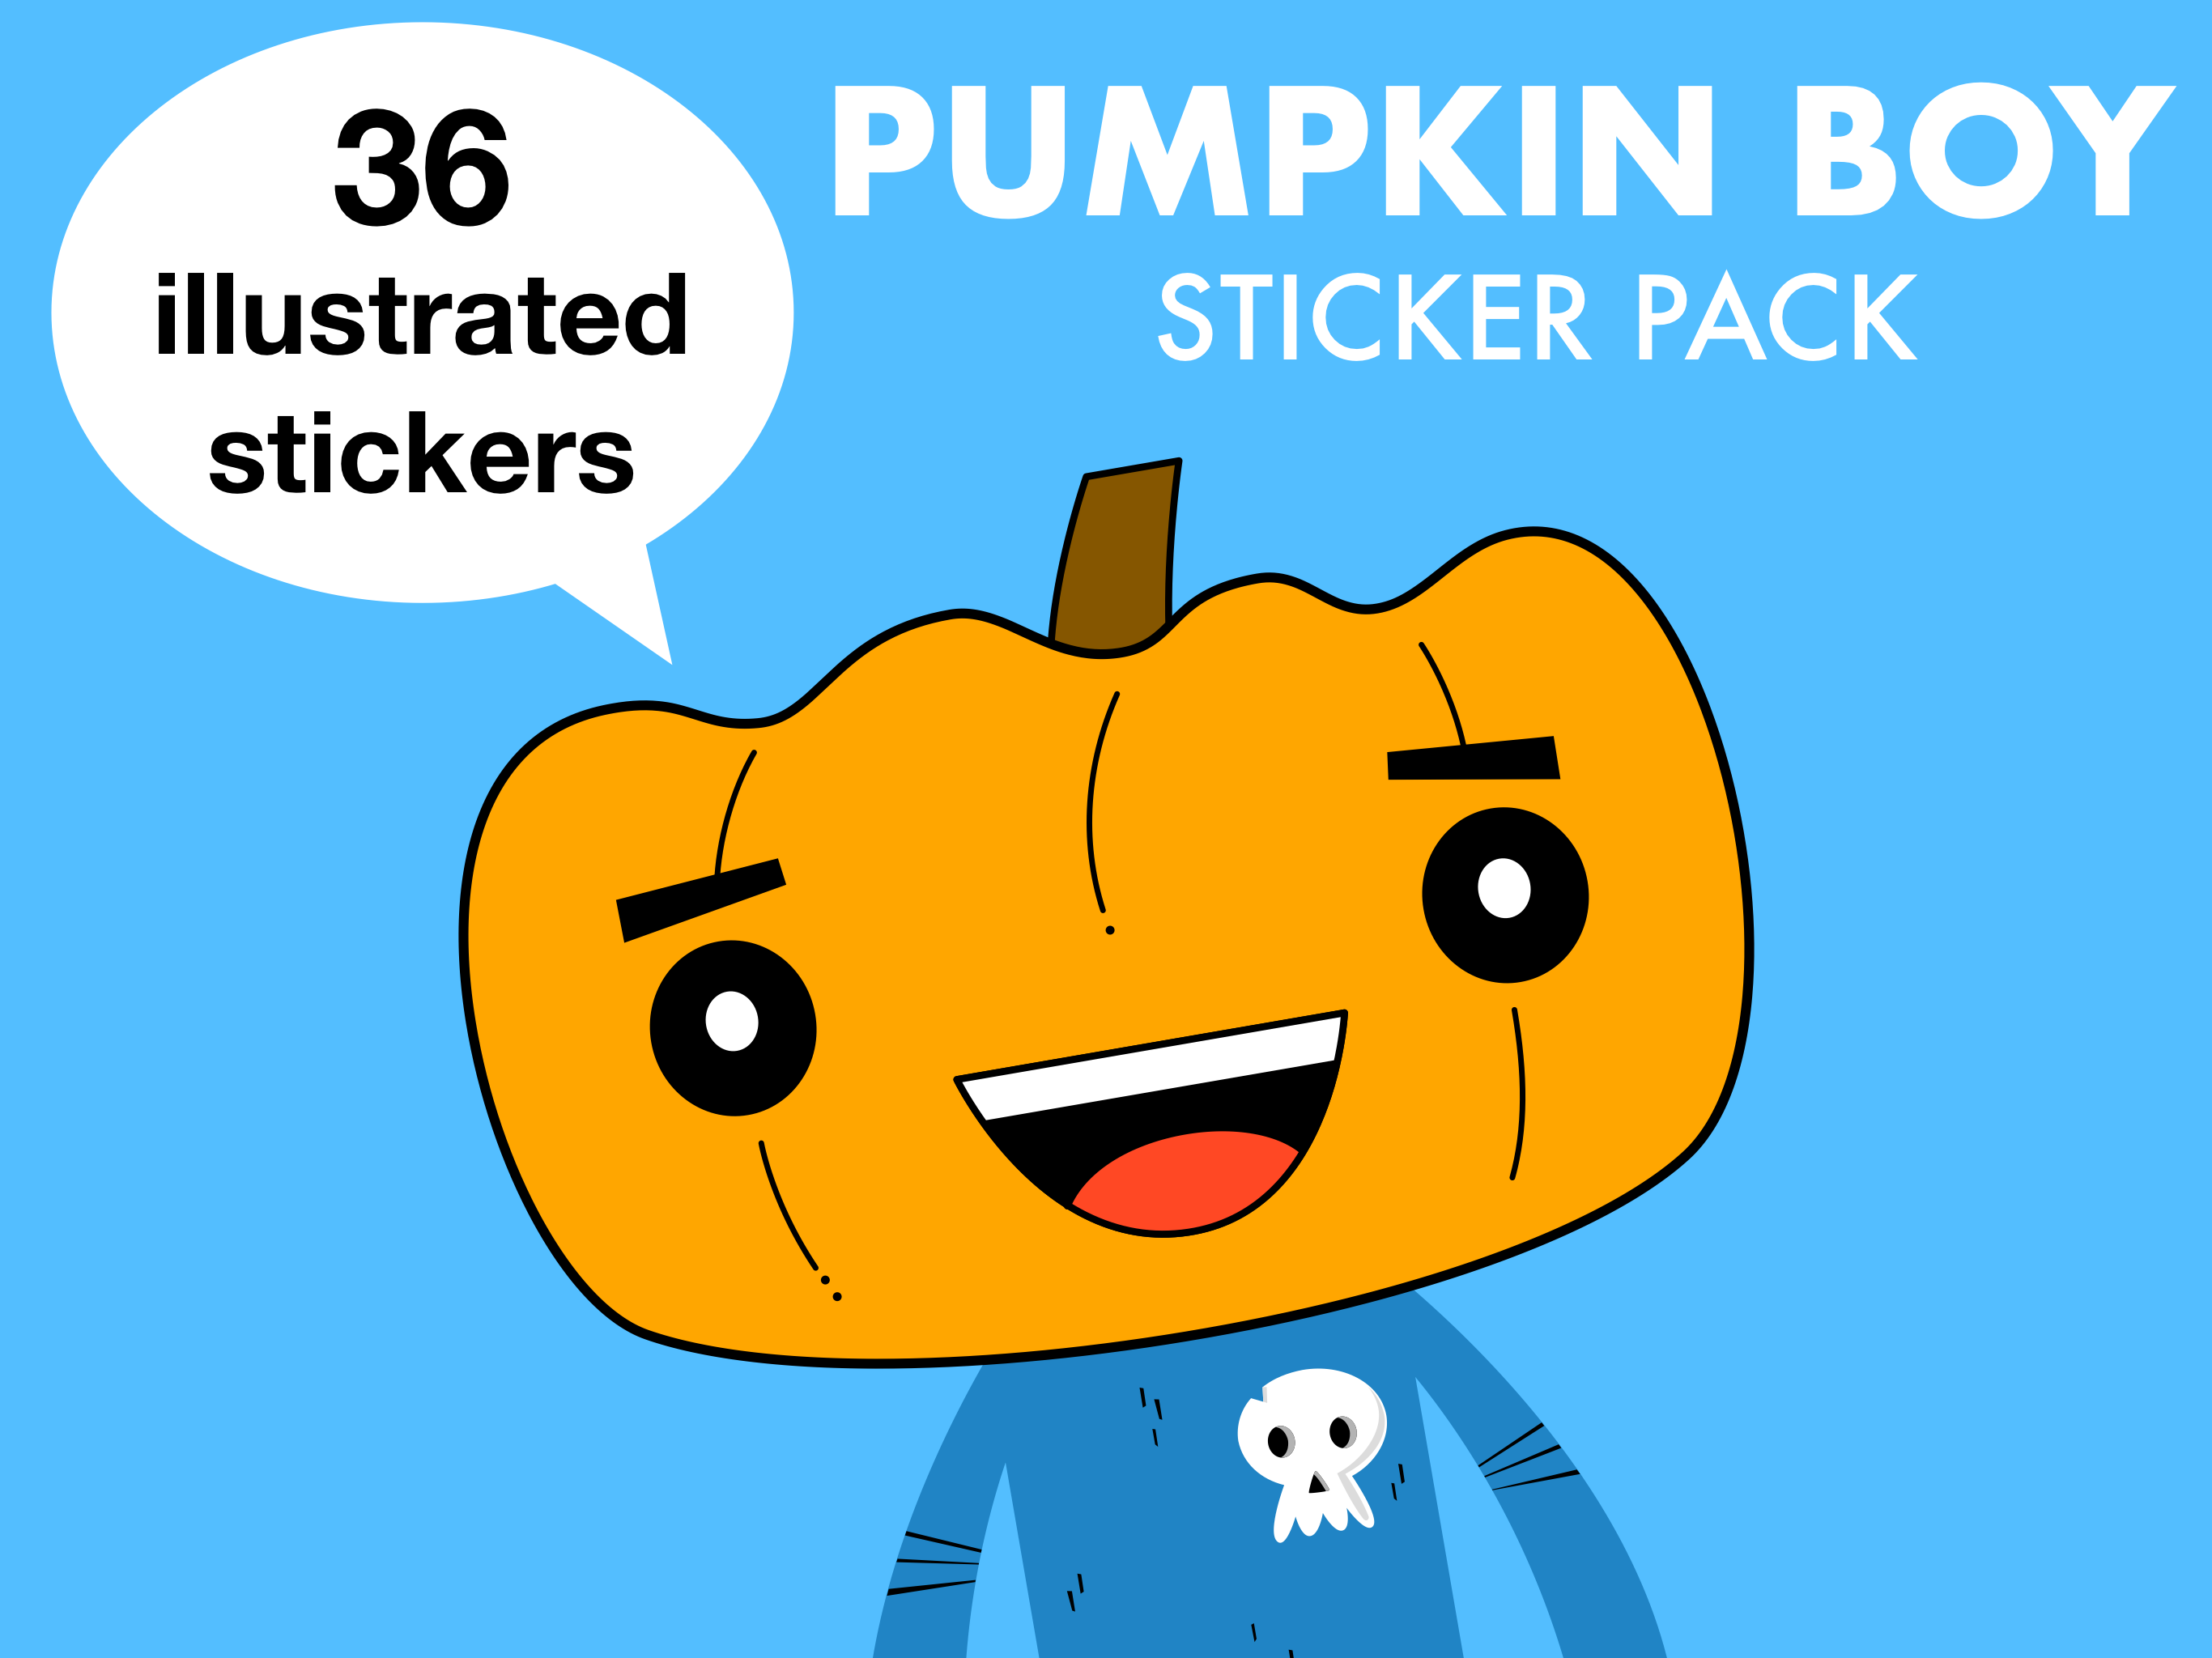 Pumpkin Boy iOS sticker pack